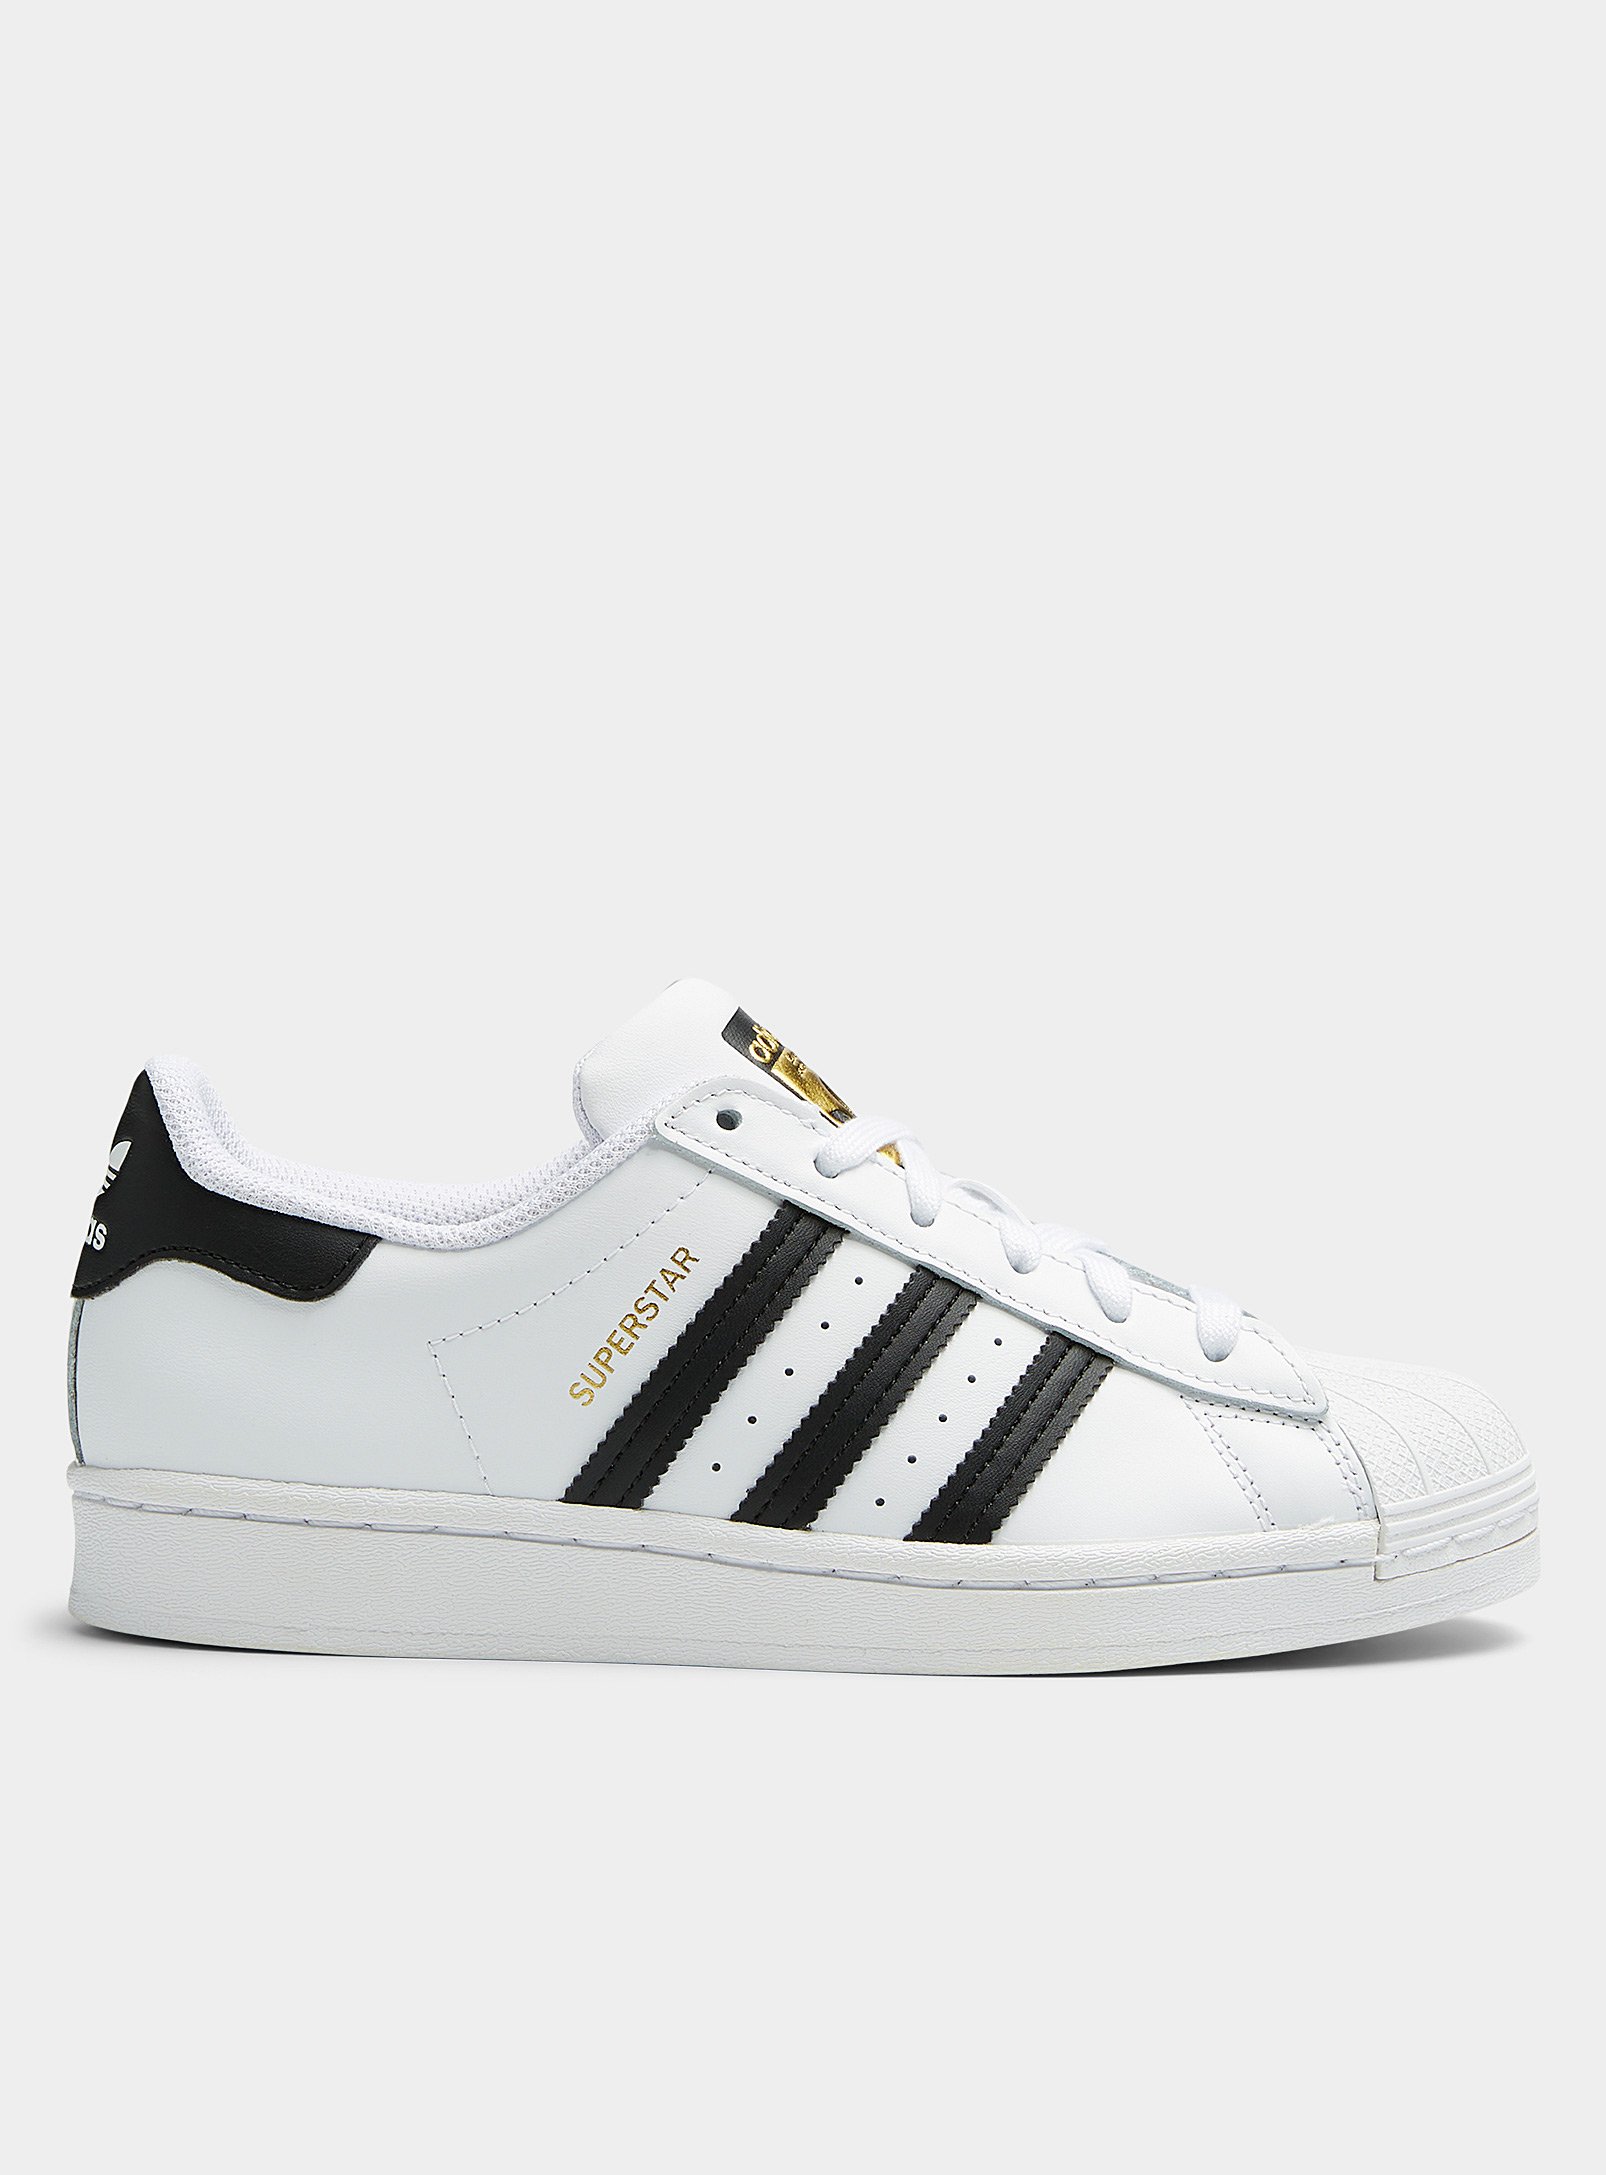 Adidas Originals - Chaussures Le Sneaker Superstar noir et blanc Femme